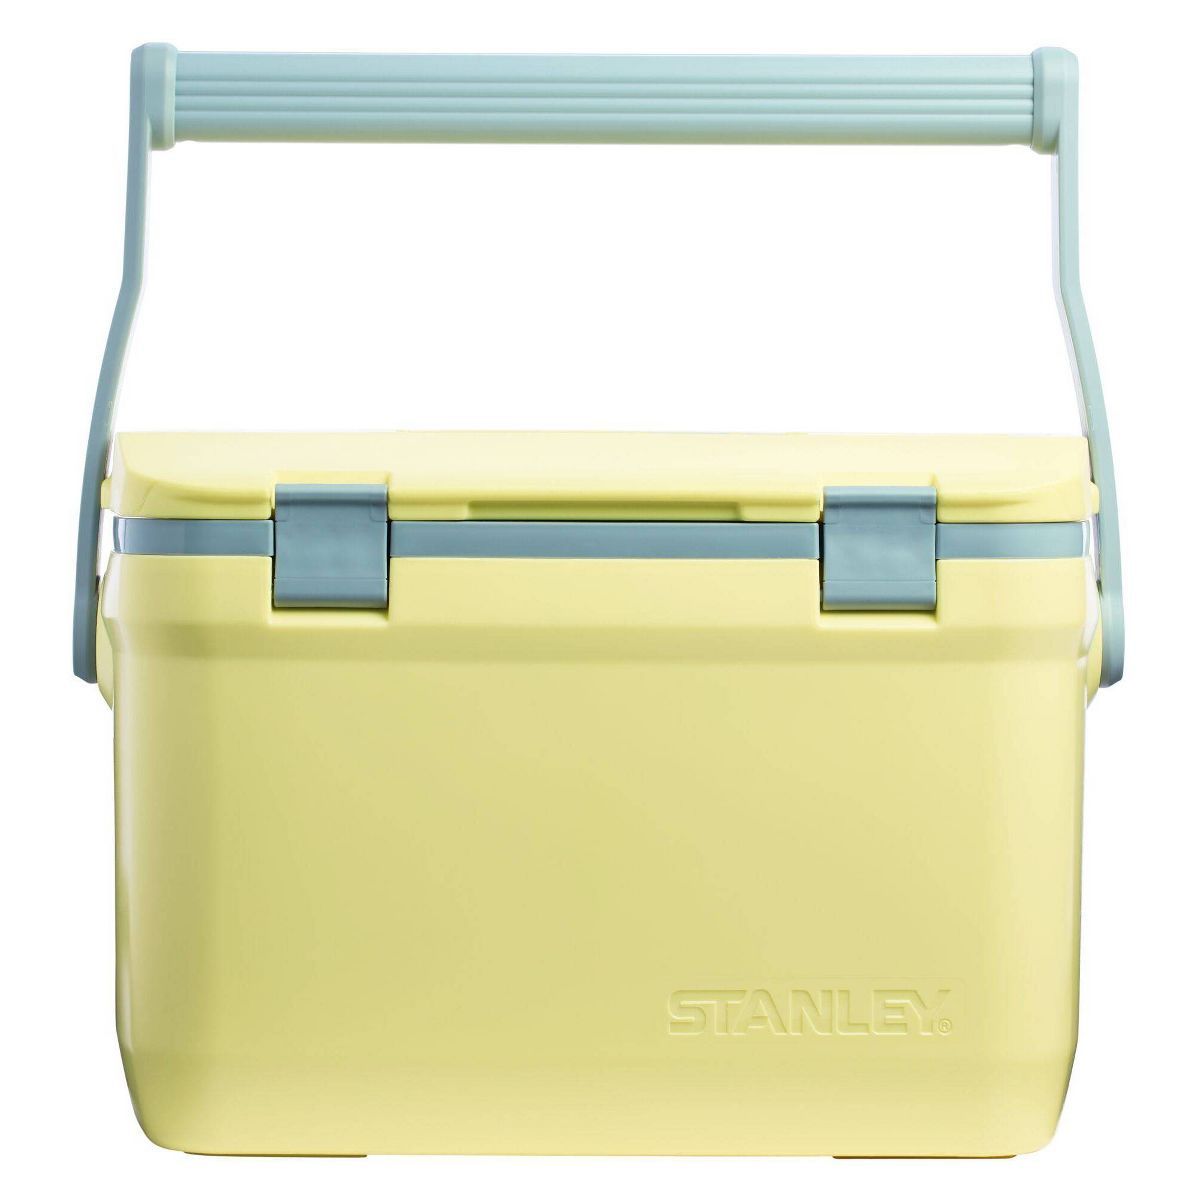 Stanley 16qt Plastic Easy-Carry Outdoor Cooler | Target